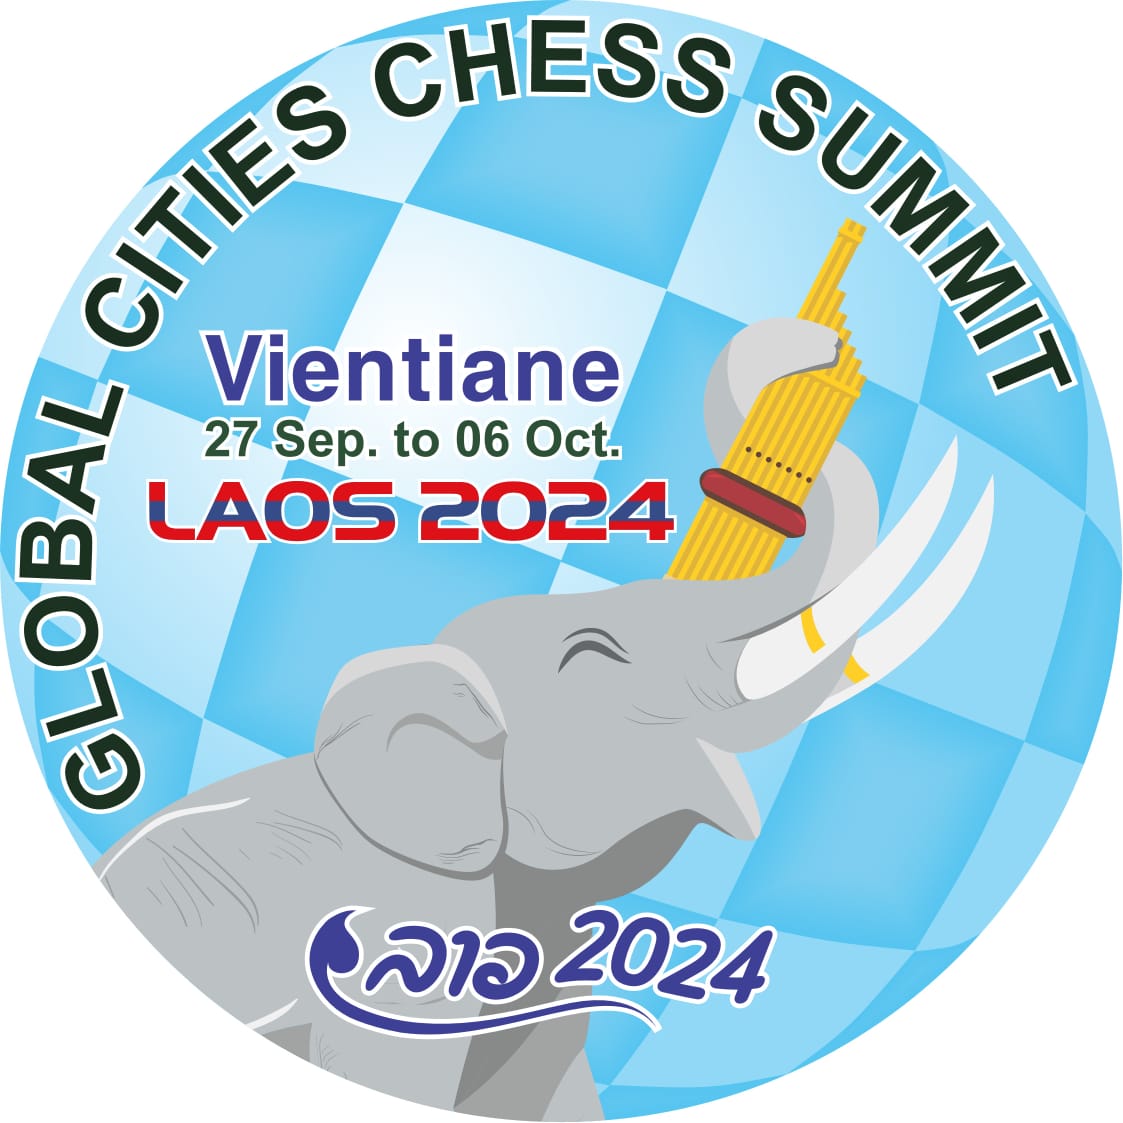 Global Cities Chess Summit